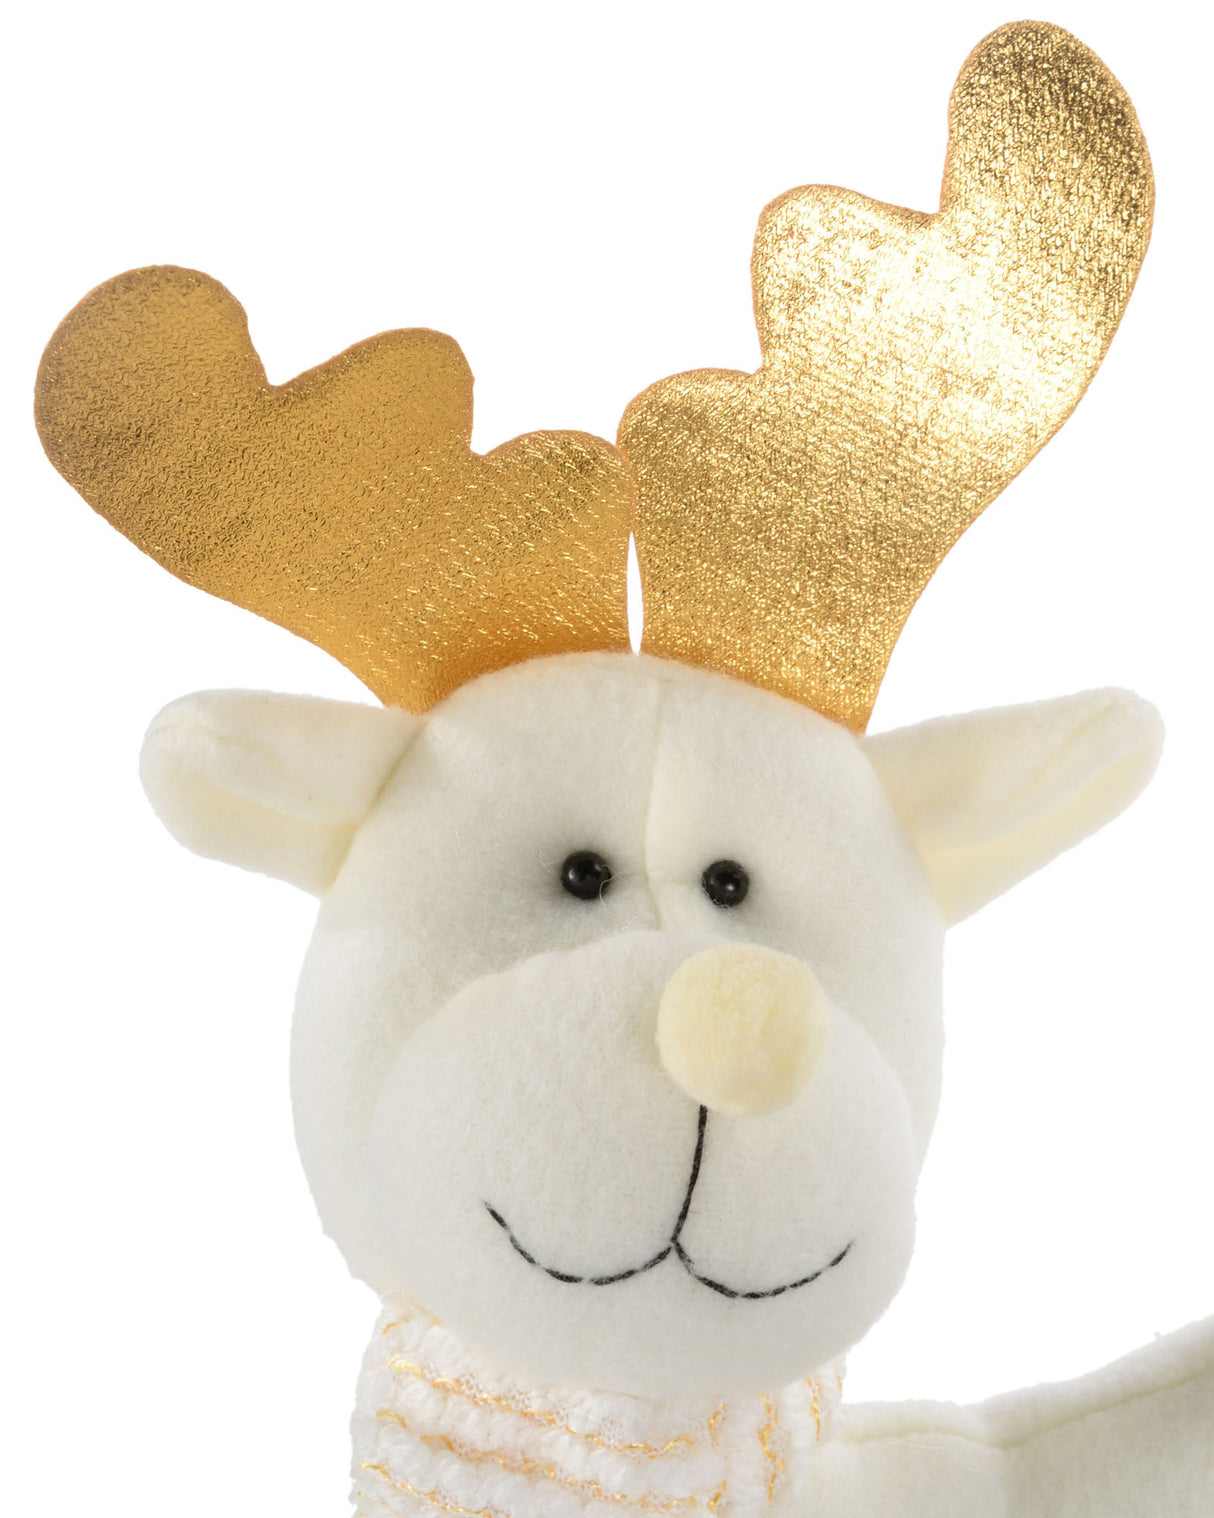 Cream & Gold Reindeer Figurine, 30 cm